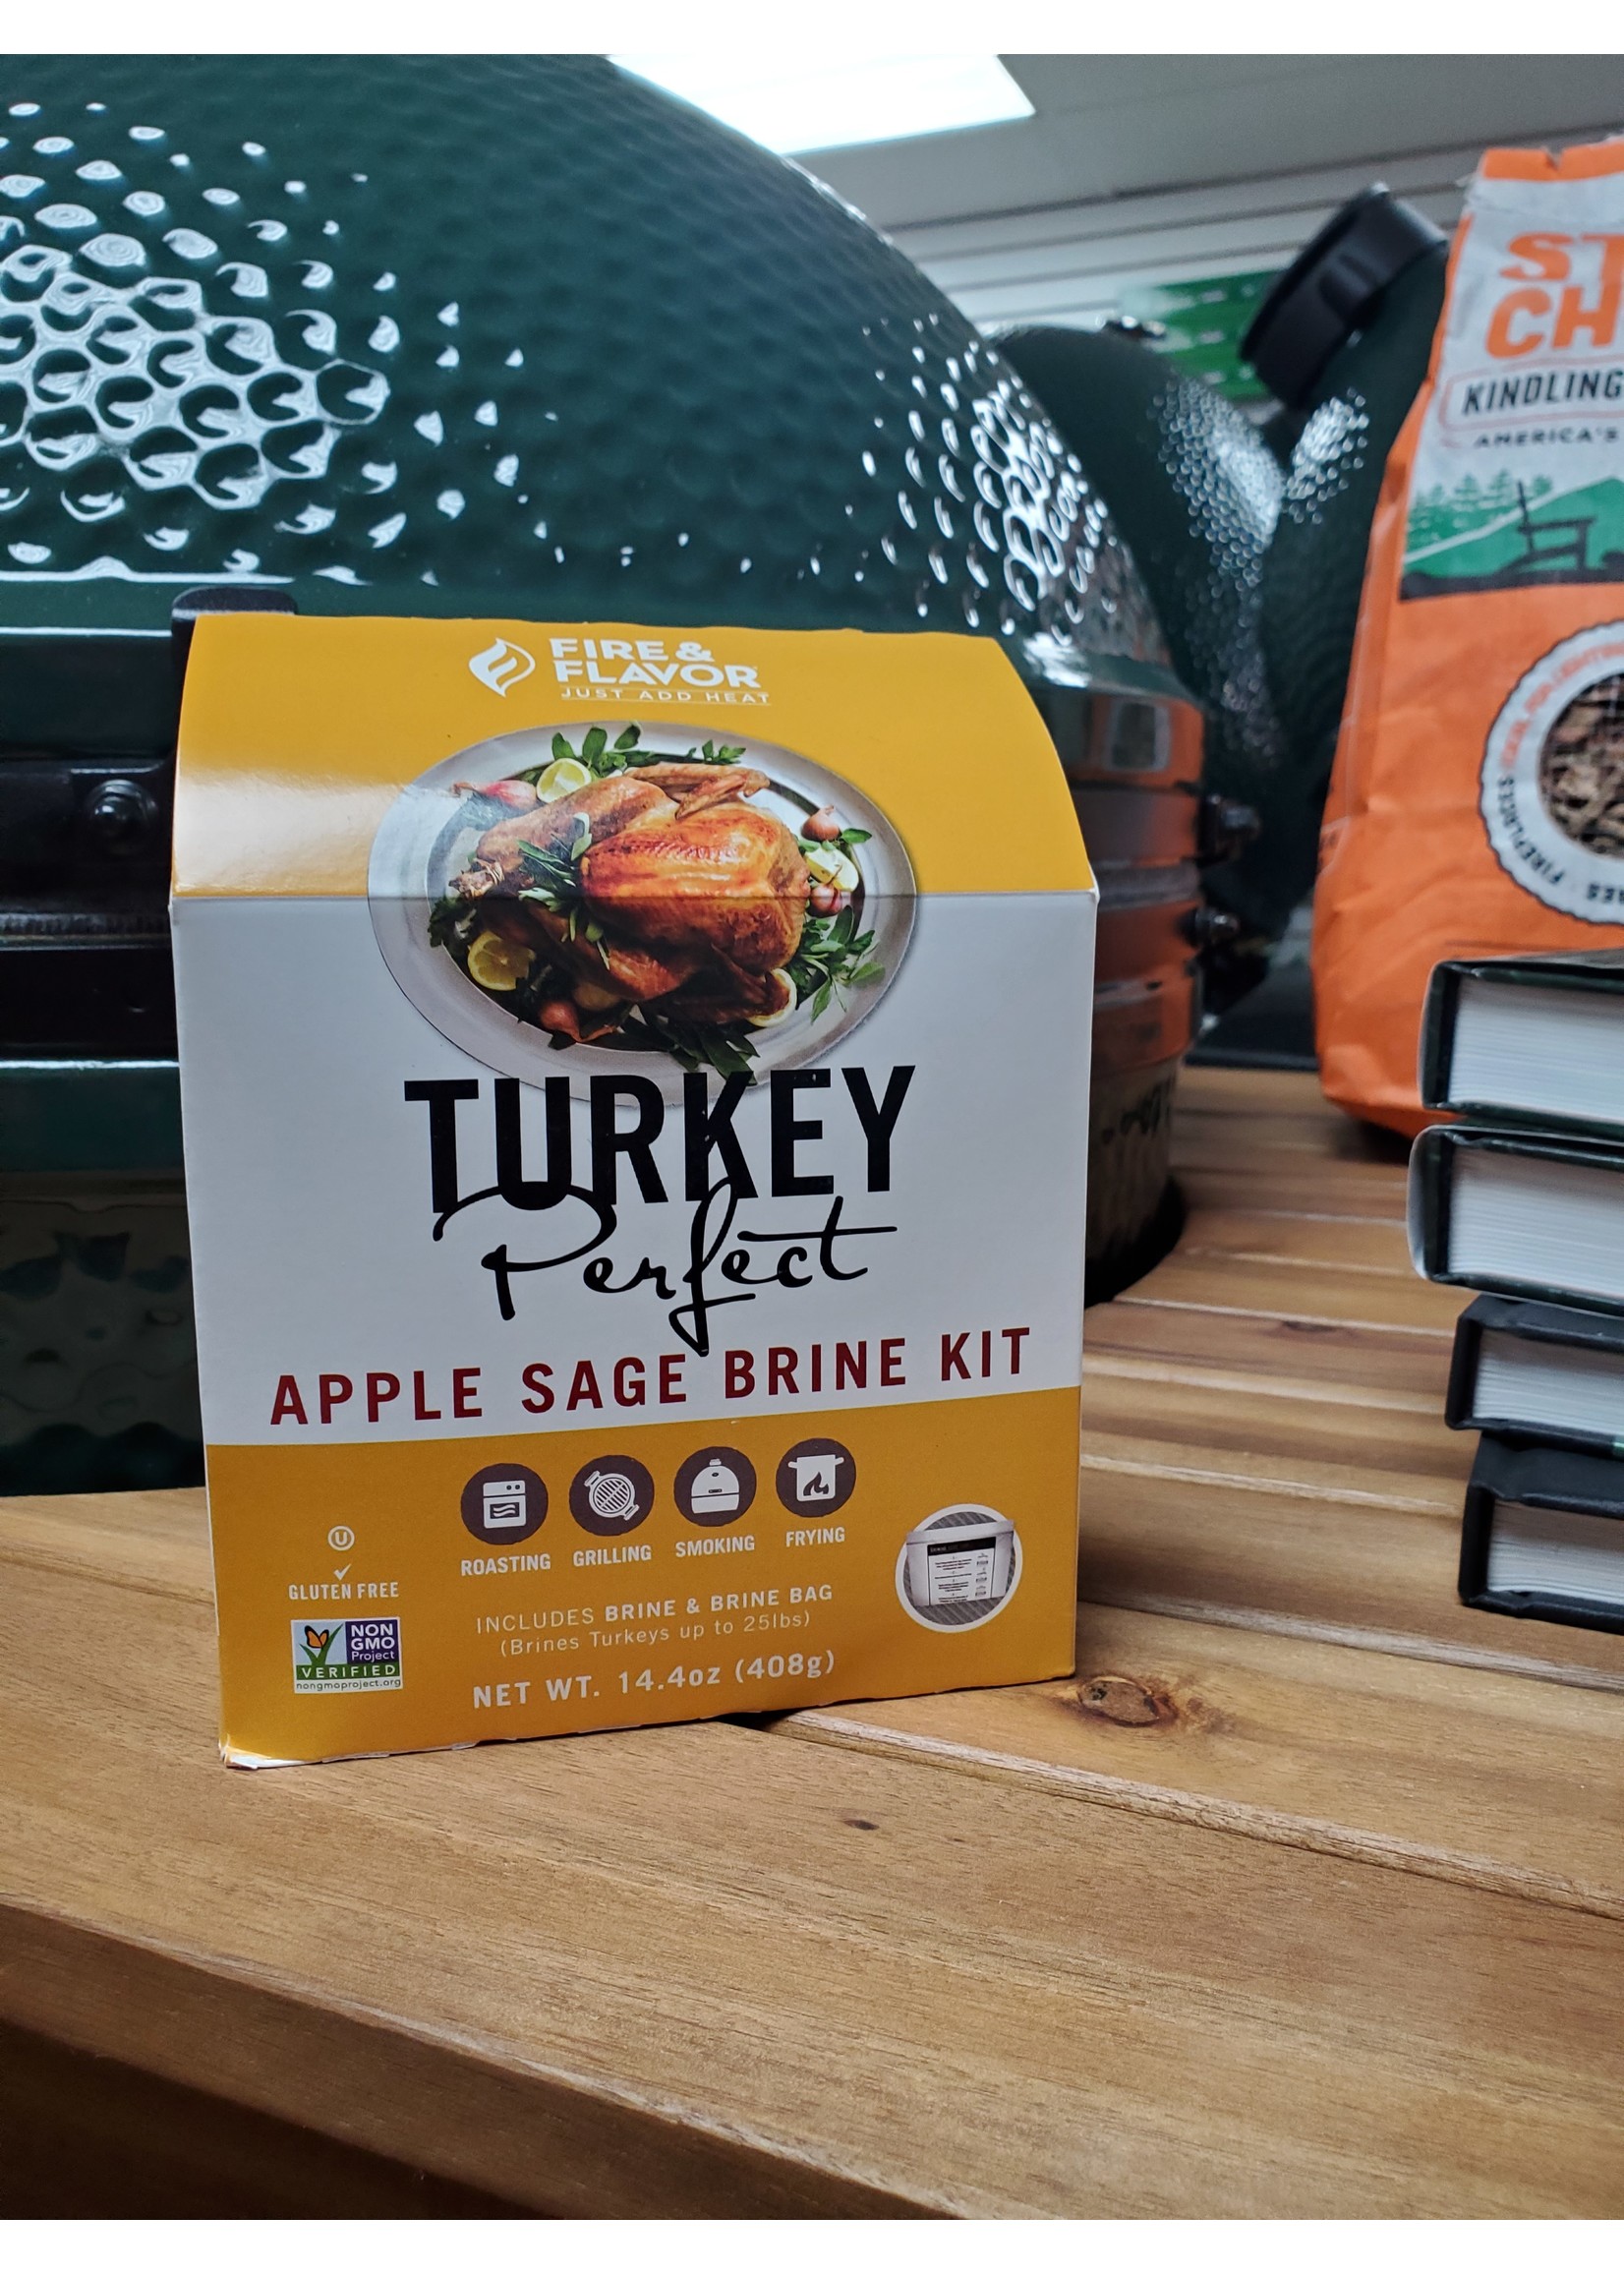 Fire & Flavor Turkey Perfect Apple Sage Brine Kit - The Grill Guys